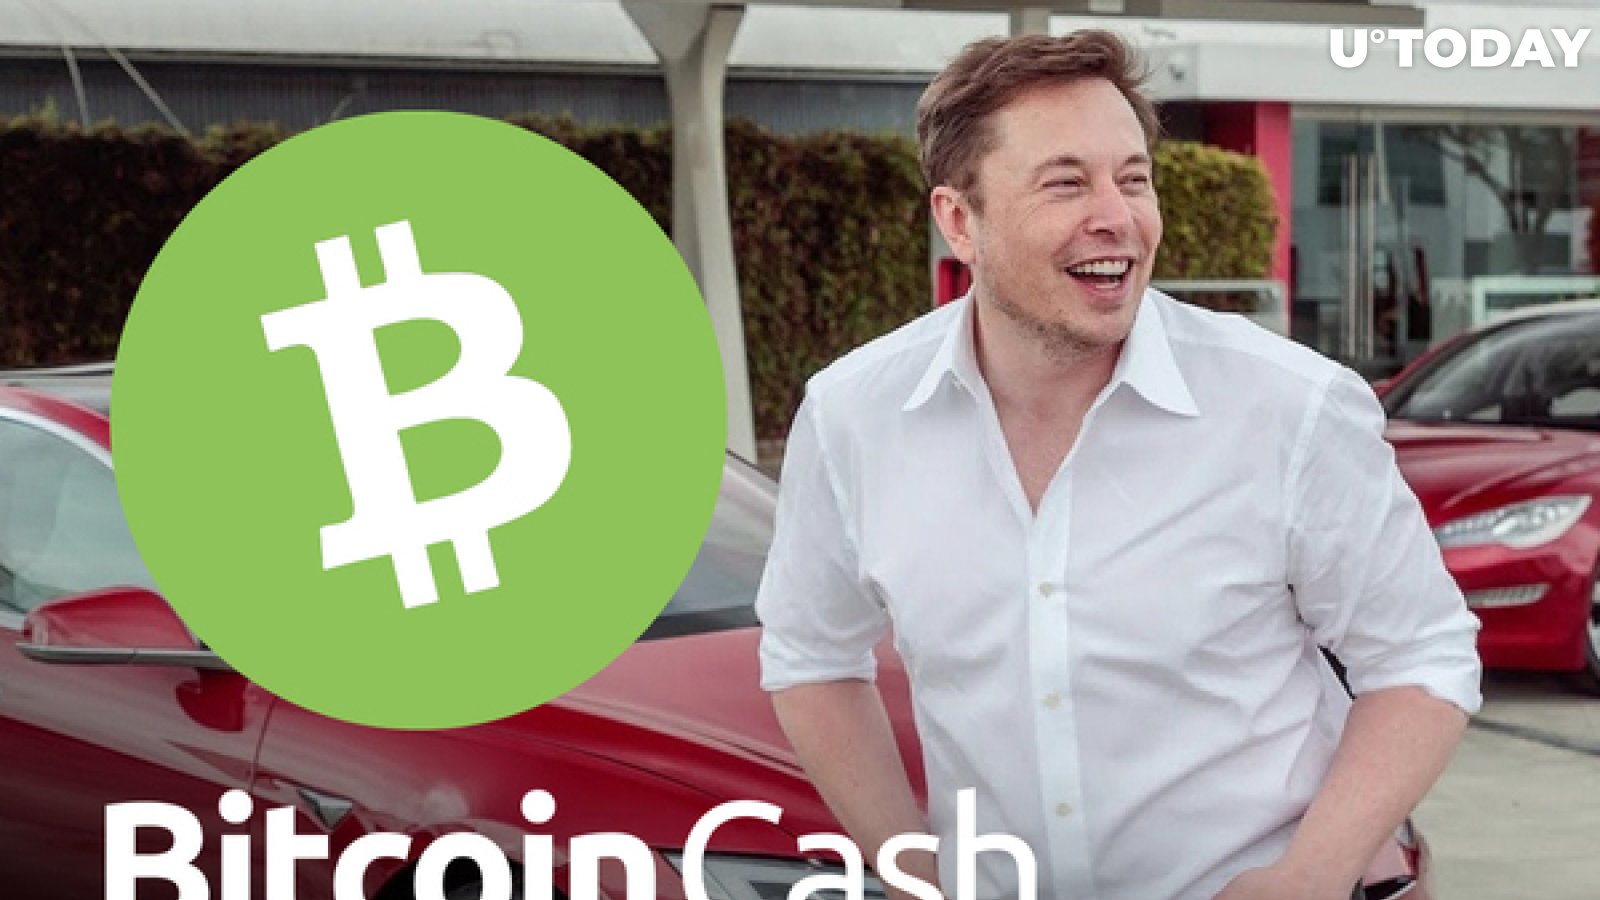 Elon Musk Agrees That Bitcoin Cash Has Certain Advantages Over Bitcoin